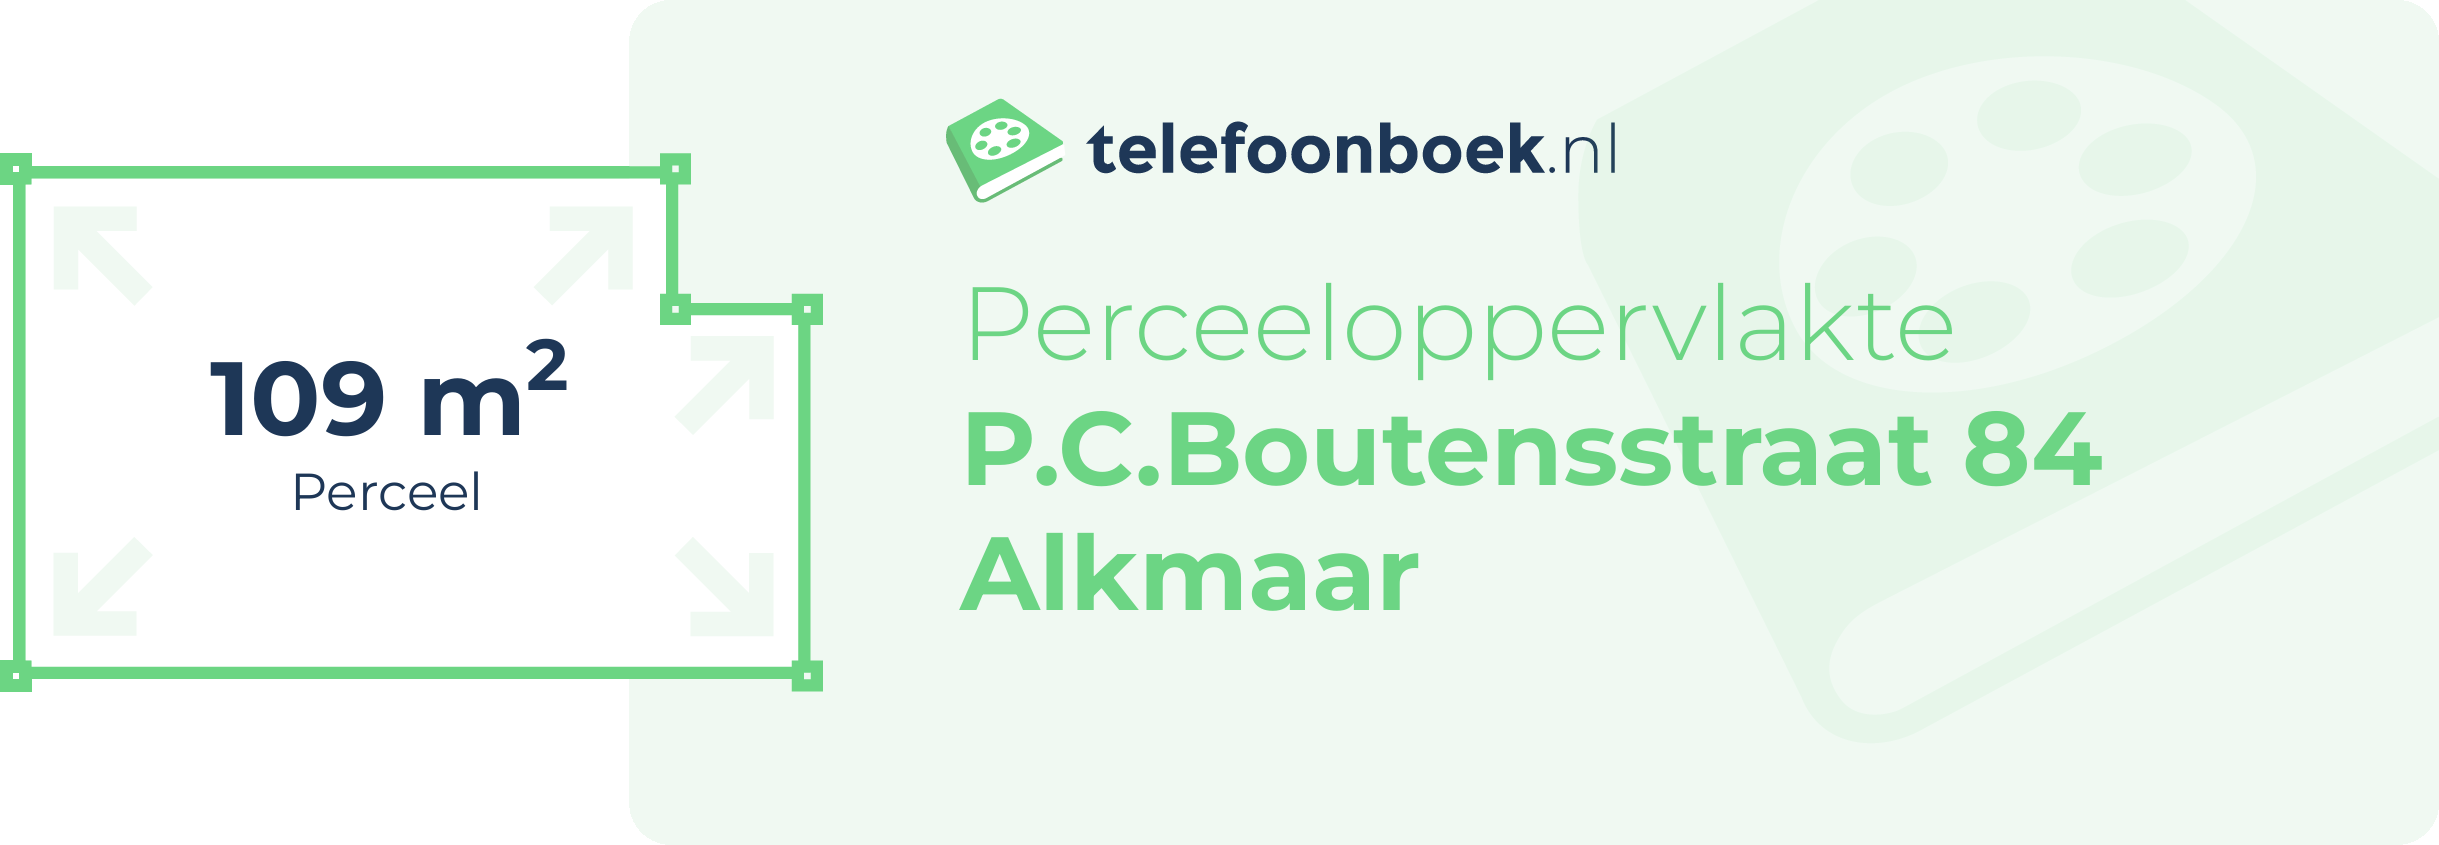 Perceeloppervlakte P.C.Boutensstraat 84 Alkmaar